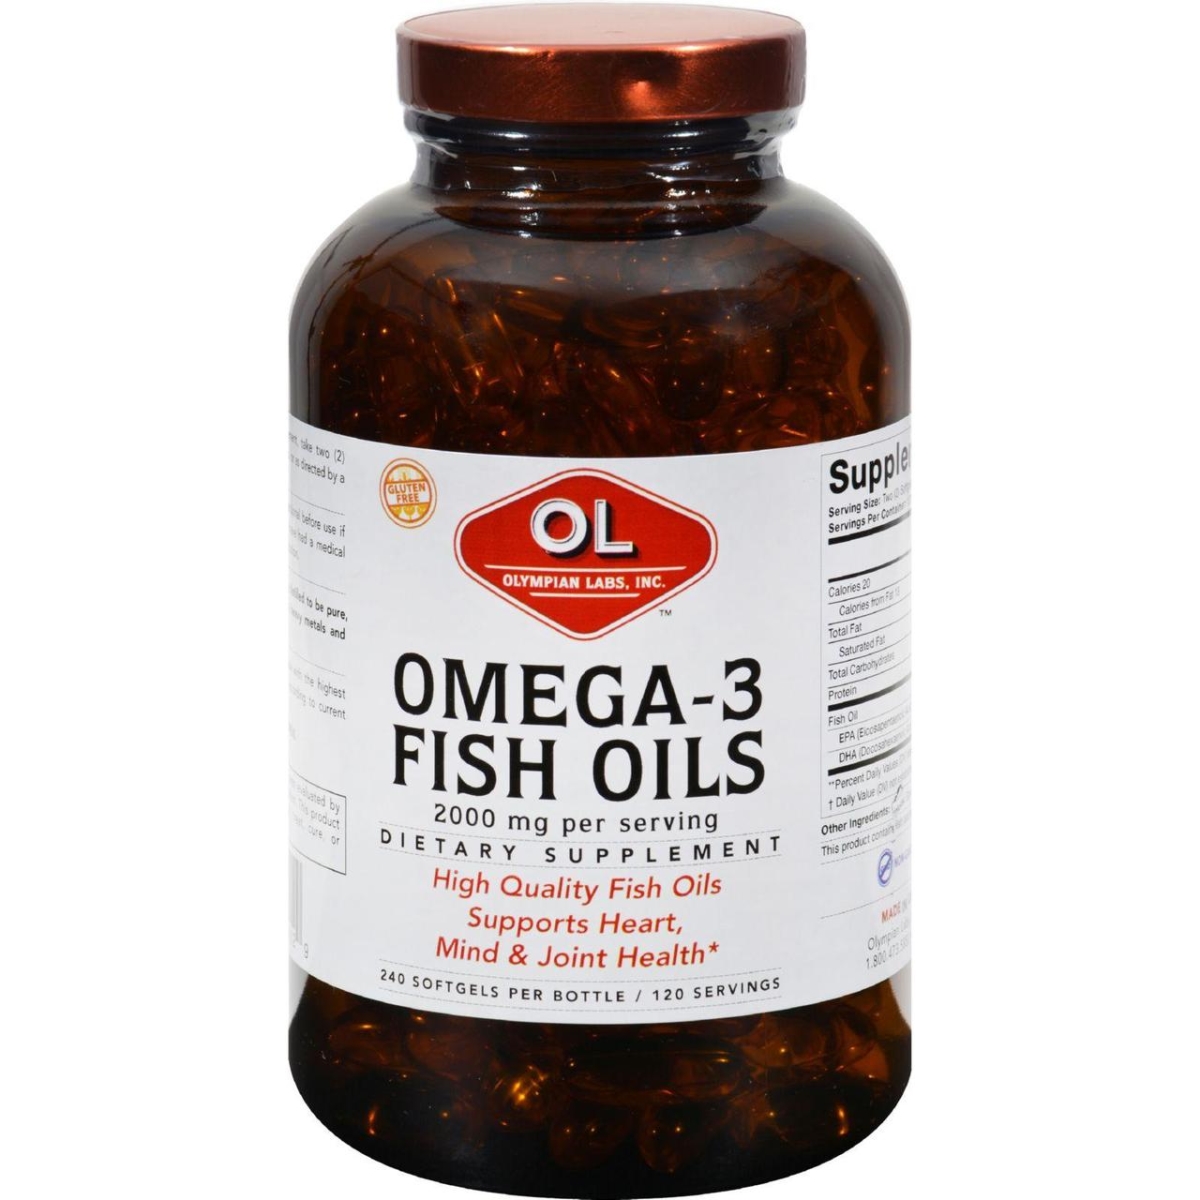 Hg0383299 1 G Omega-3 Fish Oils - 240 Softgels